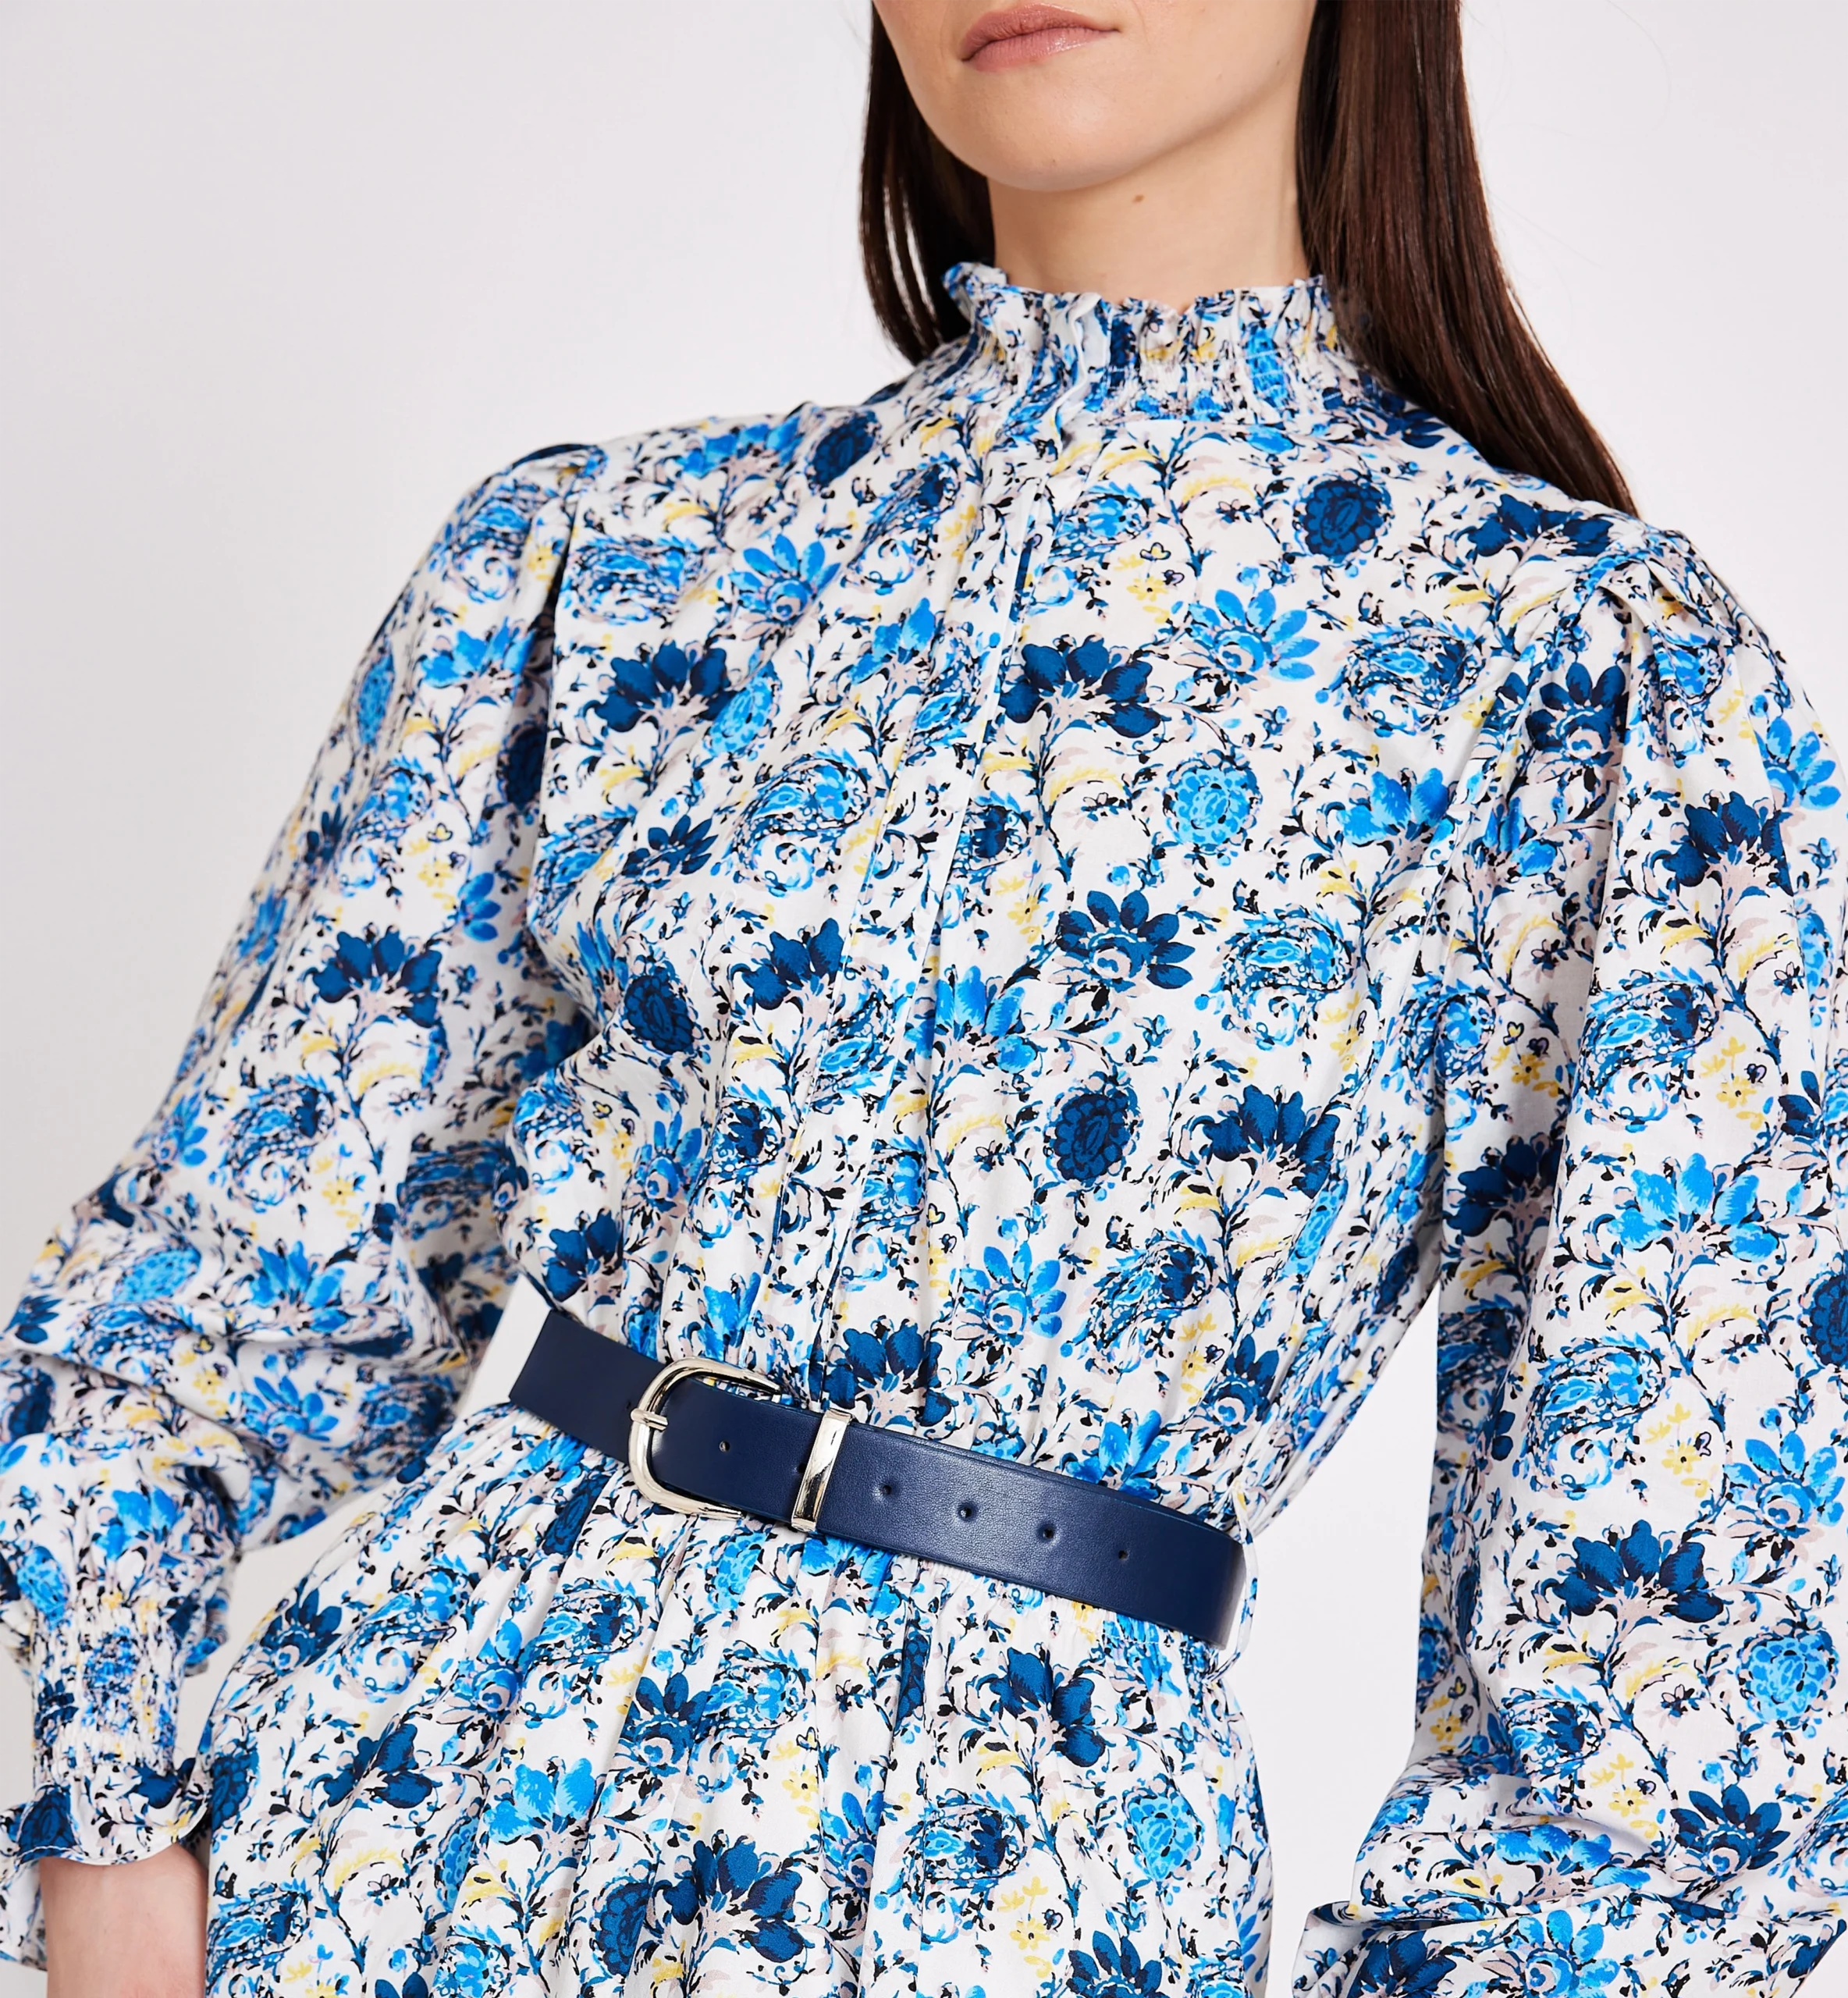 Floral print cotton dress, white&blue